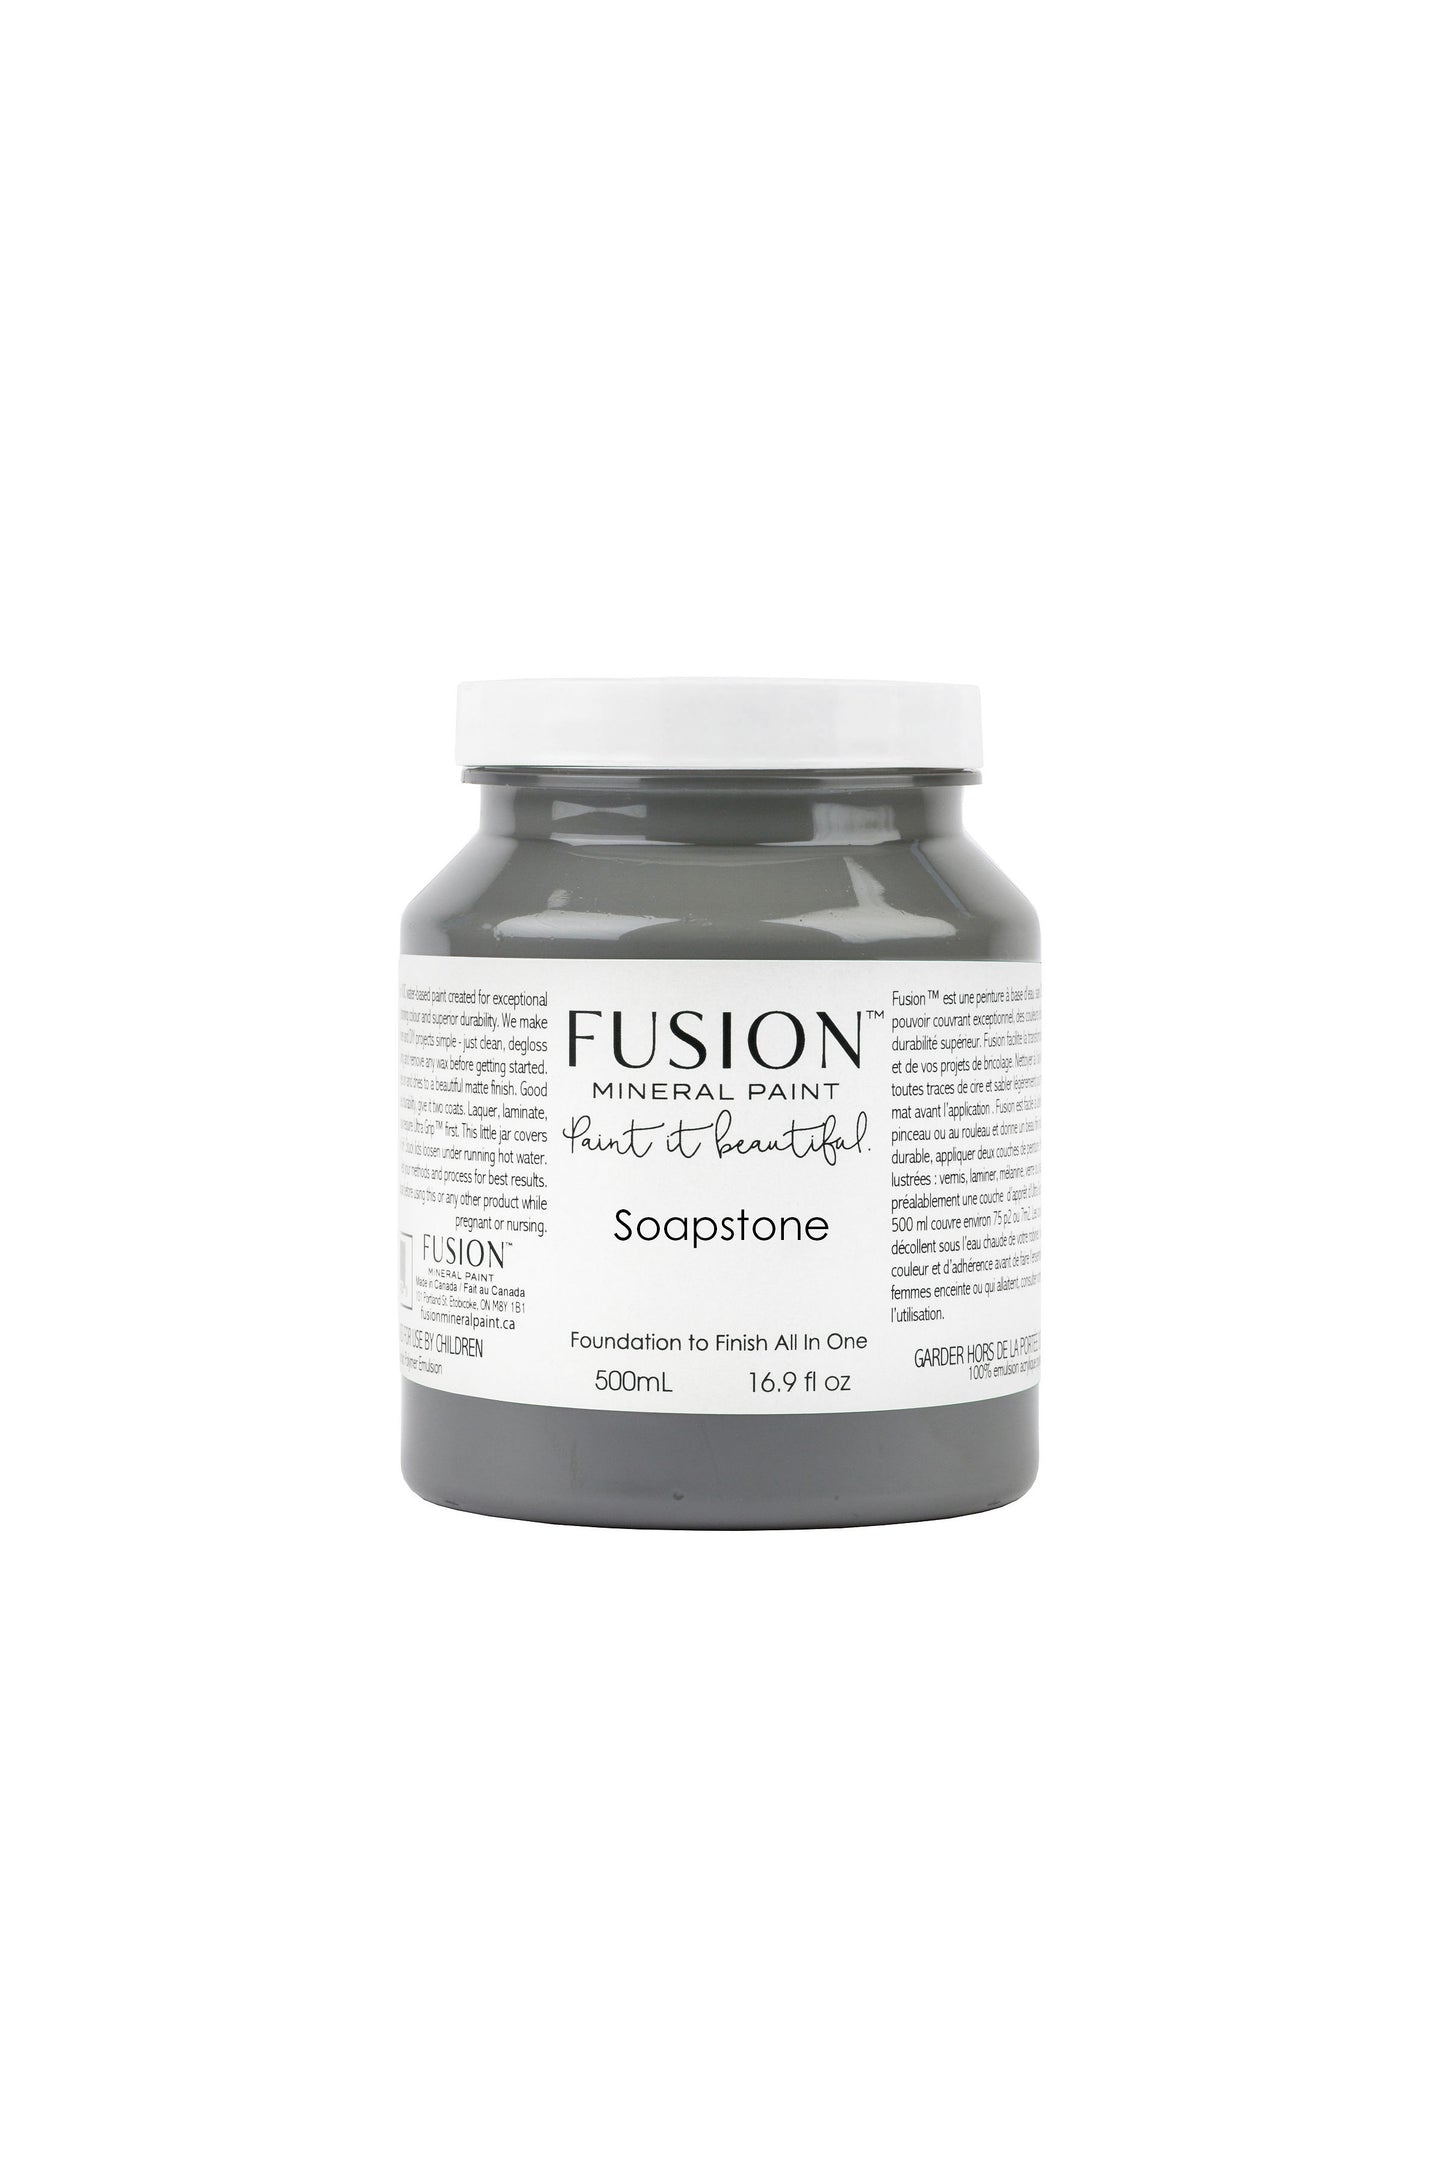 Soapstone Fusion Mineral Paint, Mid-Tone Grey  Paint Color| 500ml Pint Size